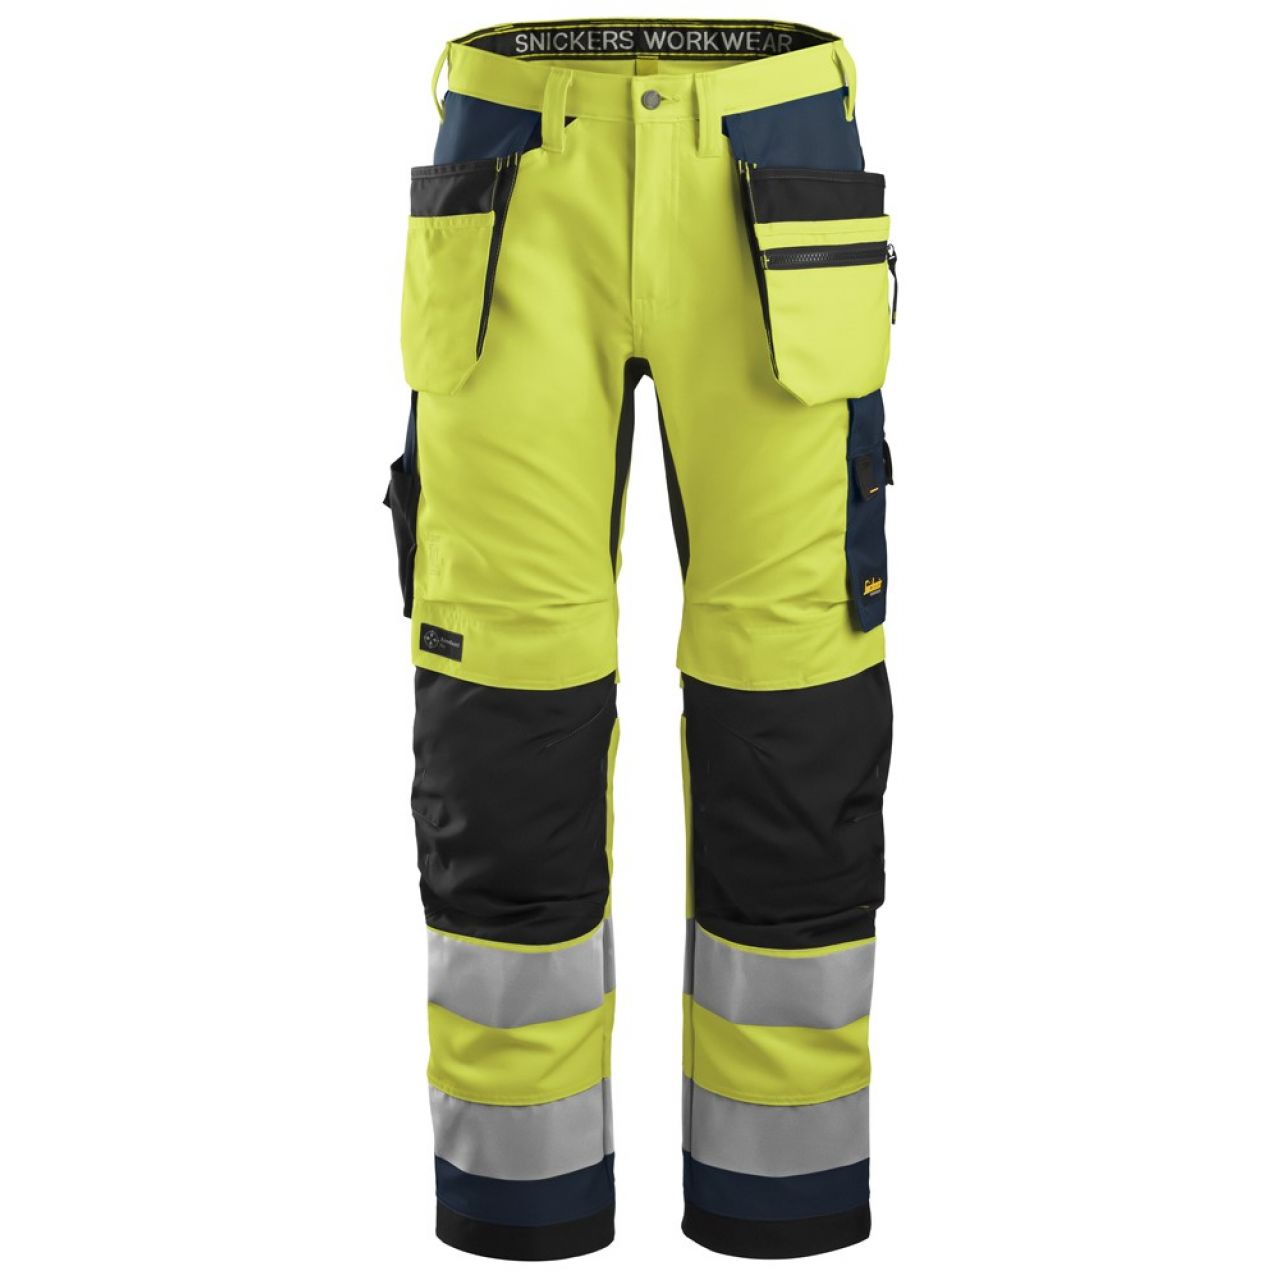 6230 Pantalones largos de trabajo de alta visibilidad clase 2 con bolsillos flotantes AllroundWork amarillo-azul marino talla 58